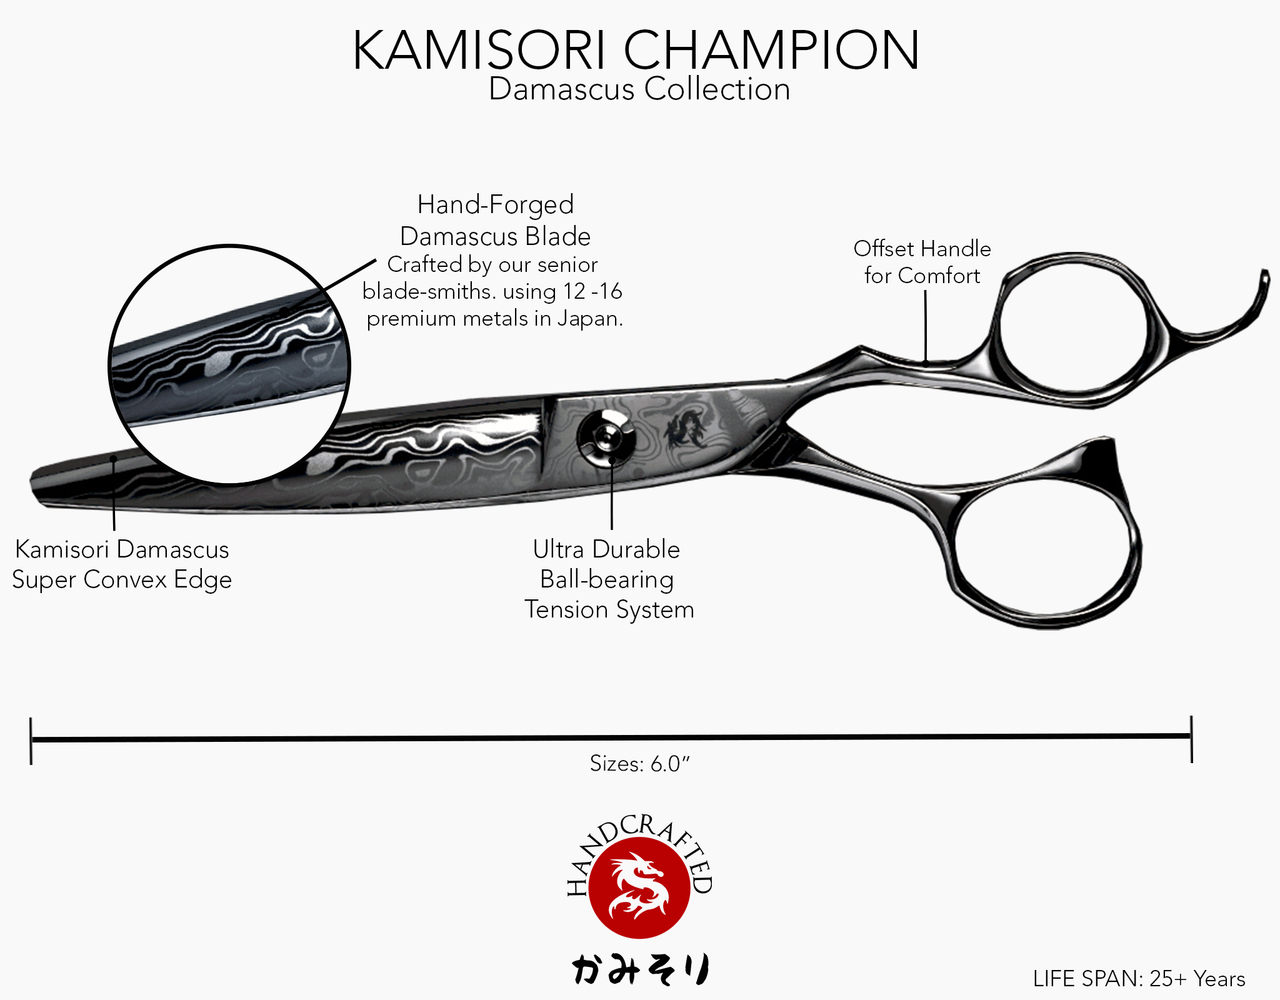 Dm-4 6 In. Samurai Professional Haircutting Shears